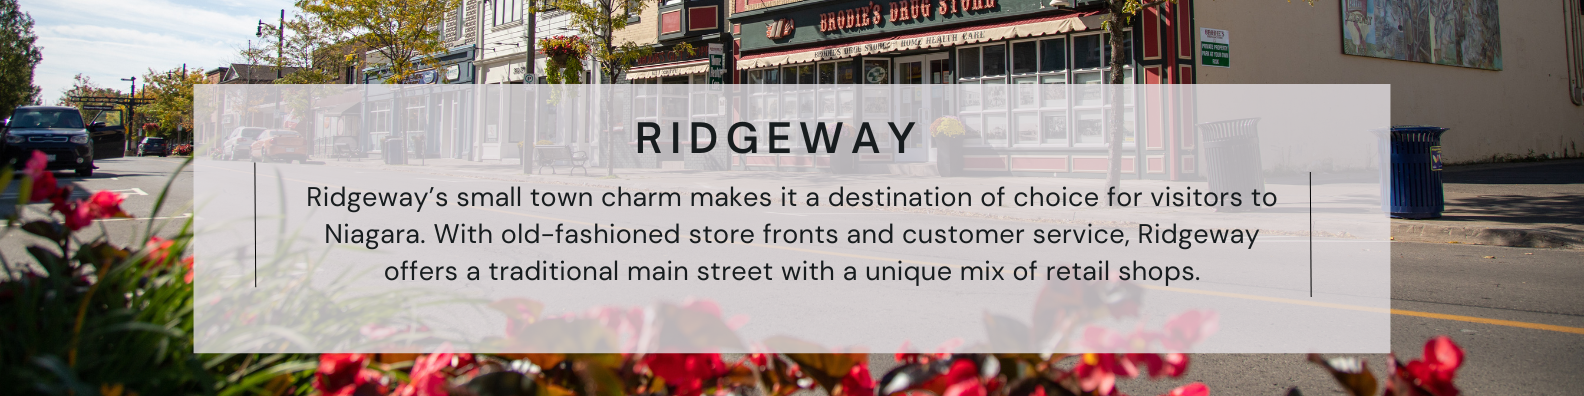 ridgeway district description